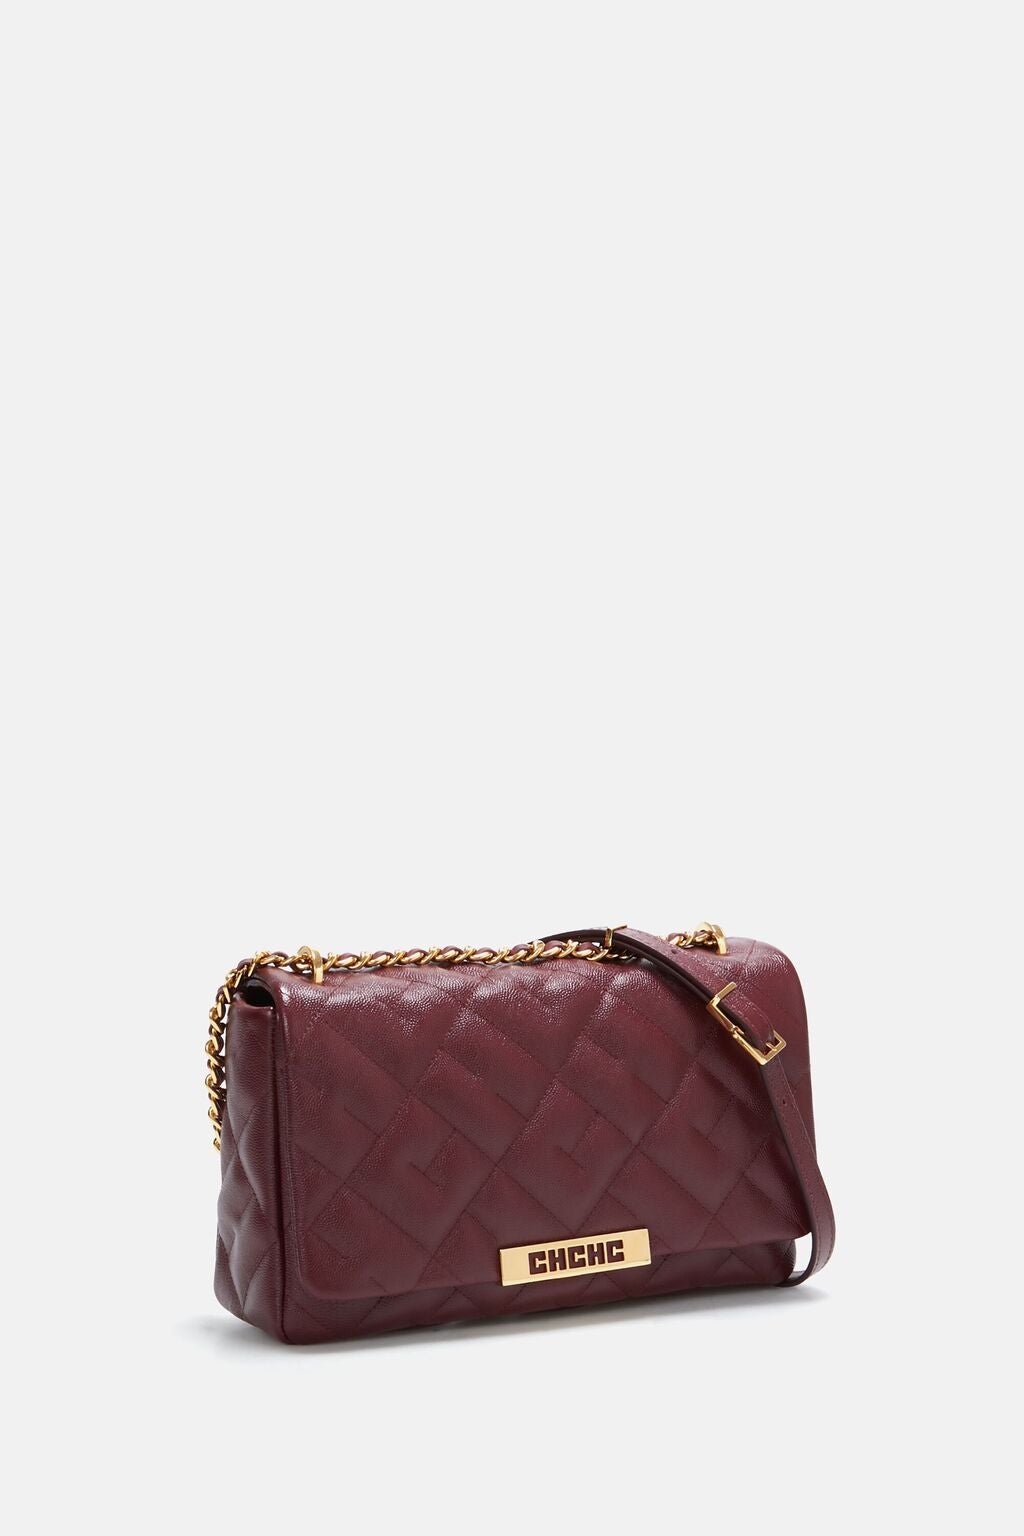 Carolina Herrera brand new granite (burgundy) convertible elegant messenger  bag